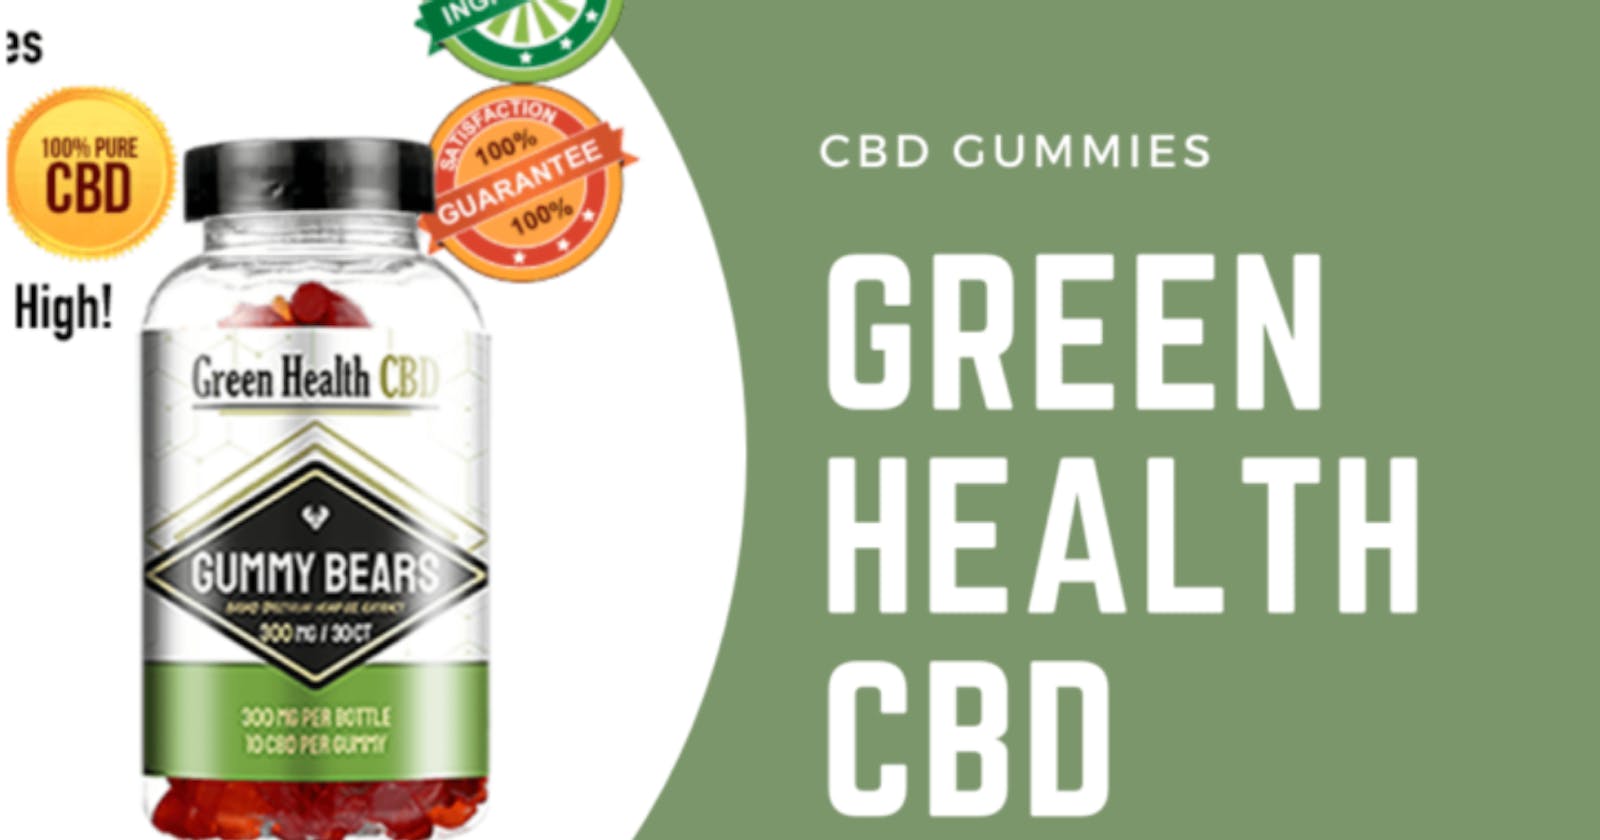 Green Health CBD Gummies Official?